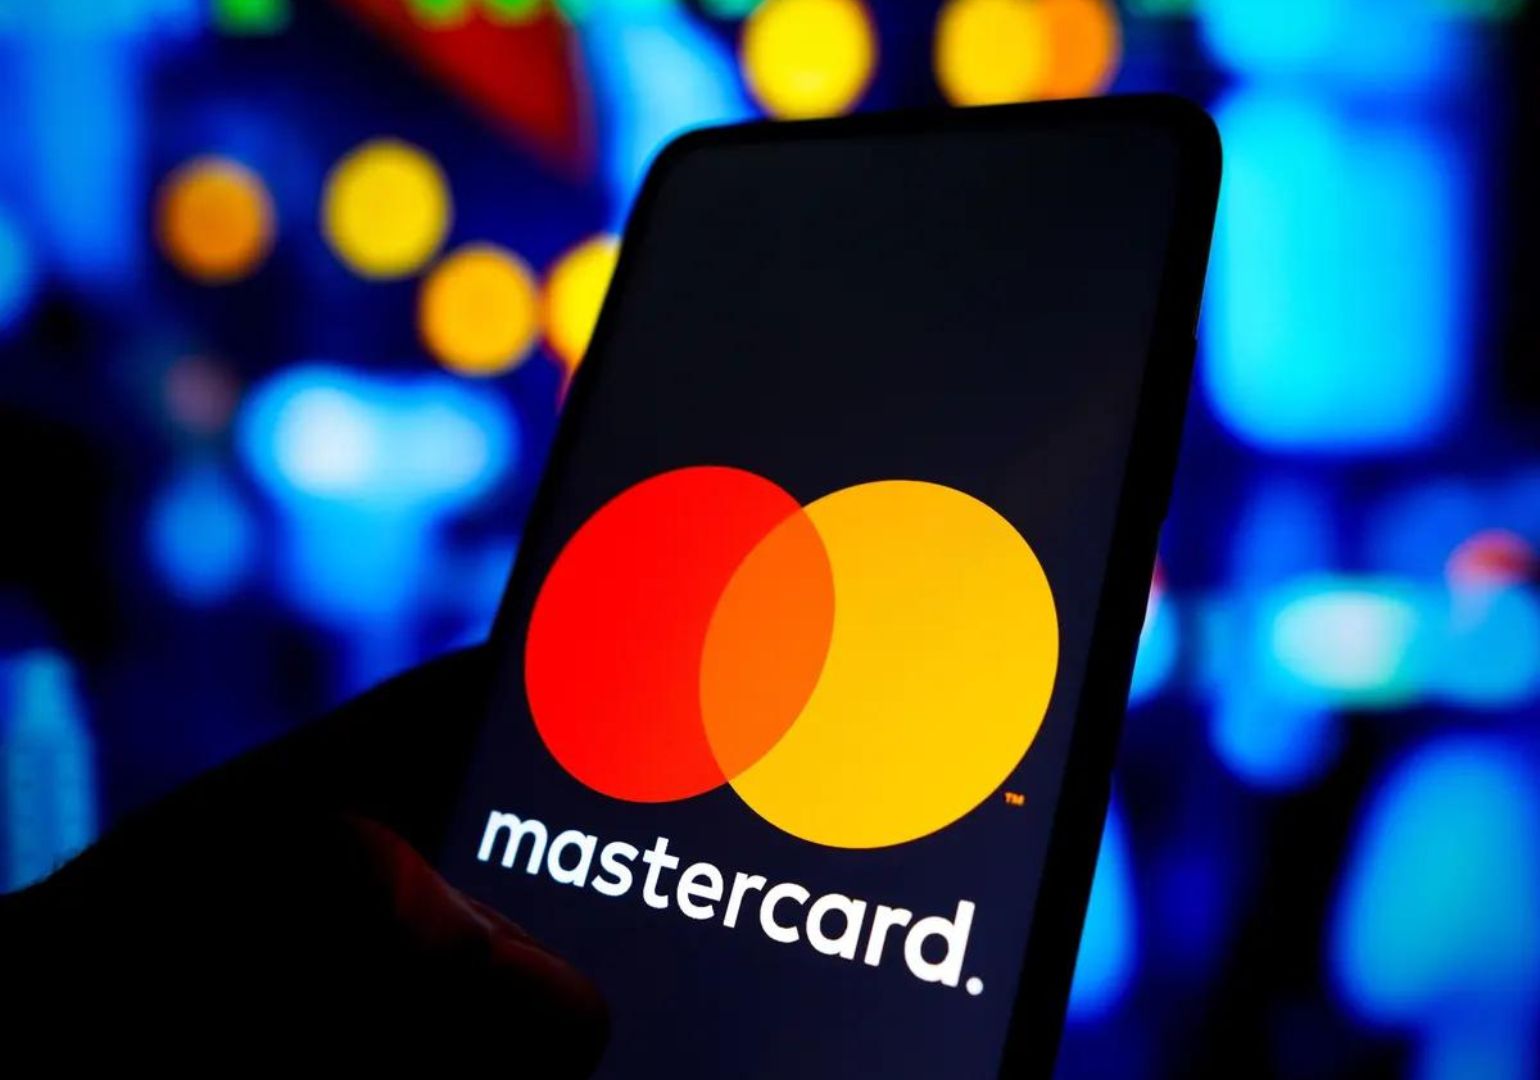 Mastercard-ი $11-მლრდ-ის ღირებულების აქციებს გამოისყიდის